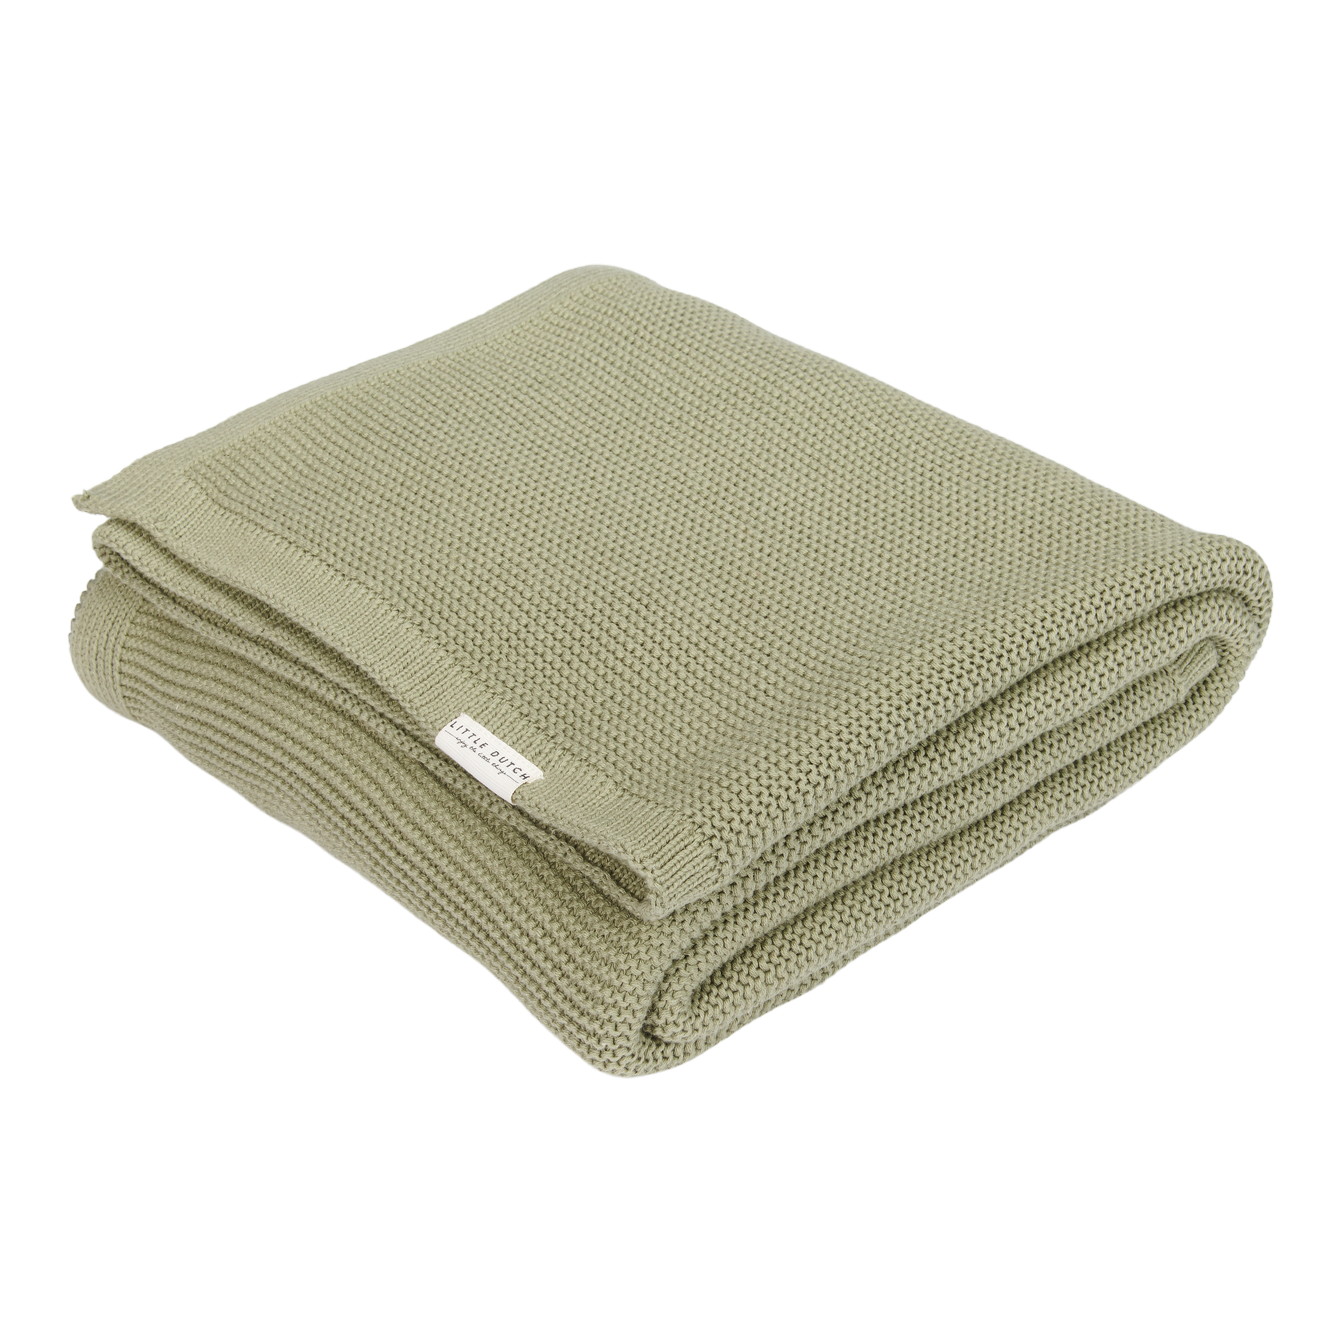 TE12514027 - Knitted blanket Olive - Little Farm (1)